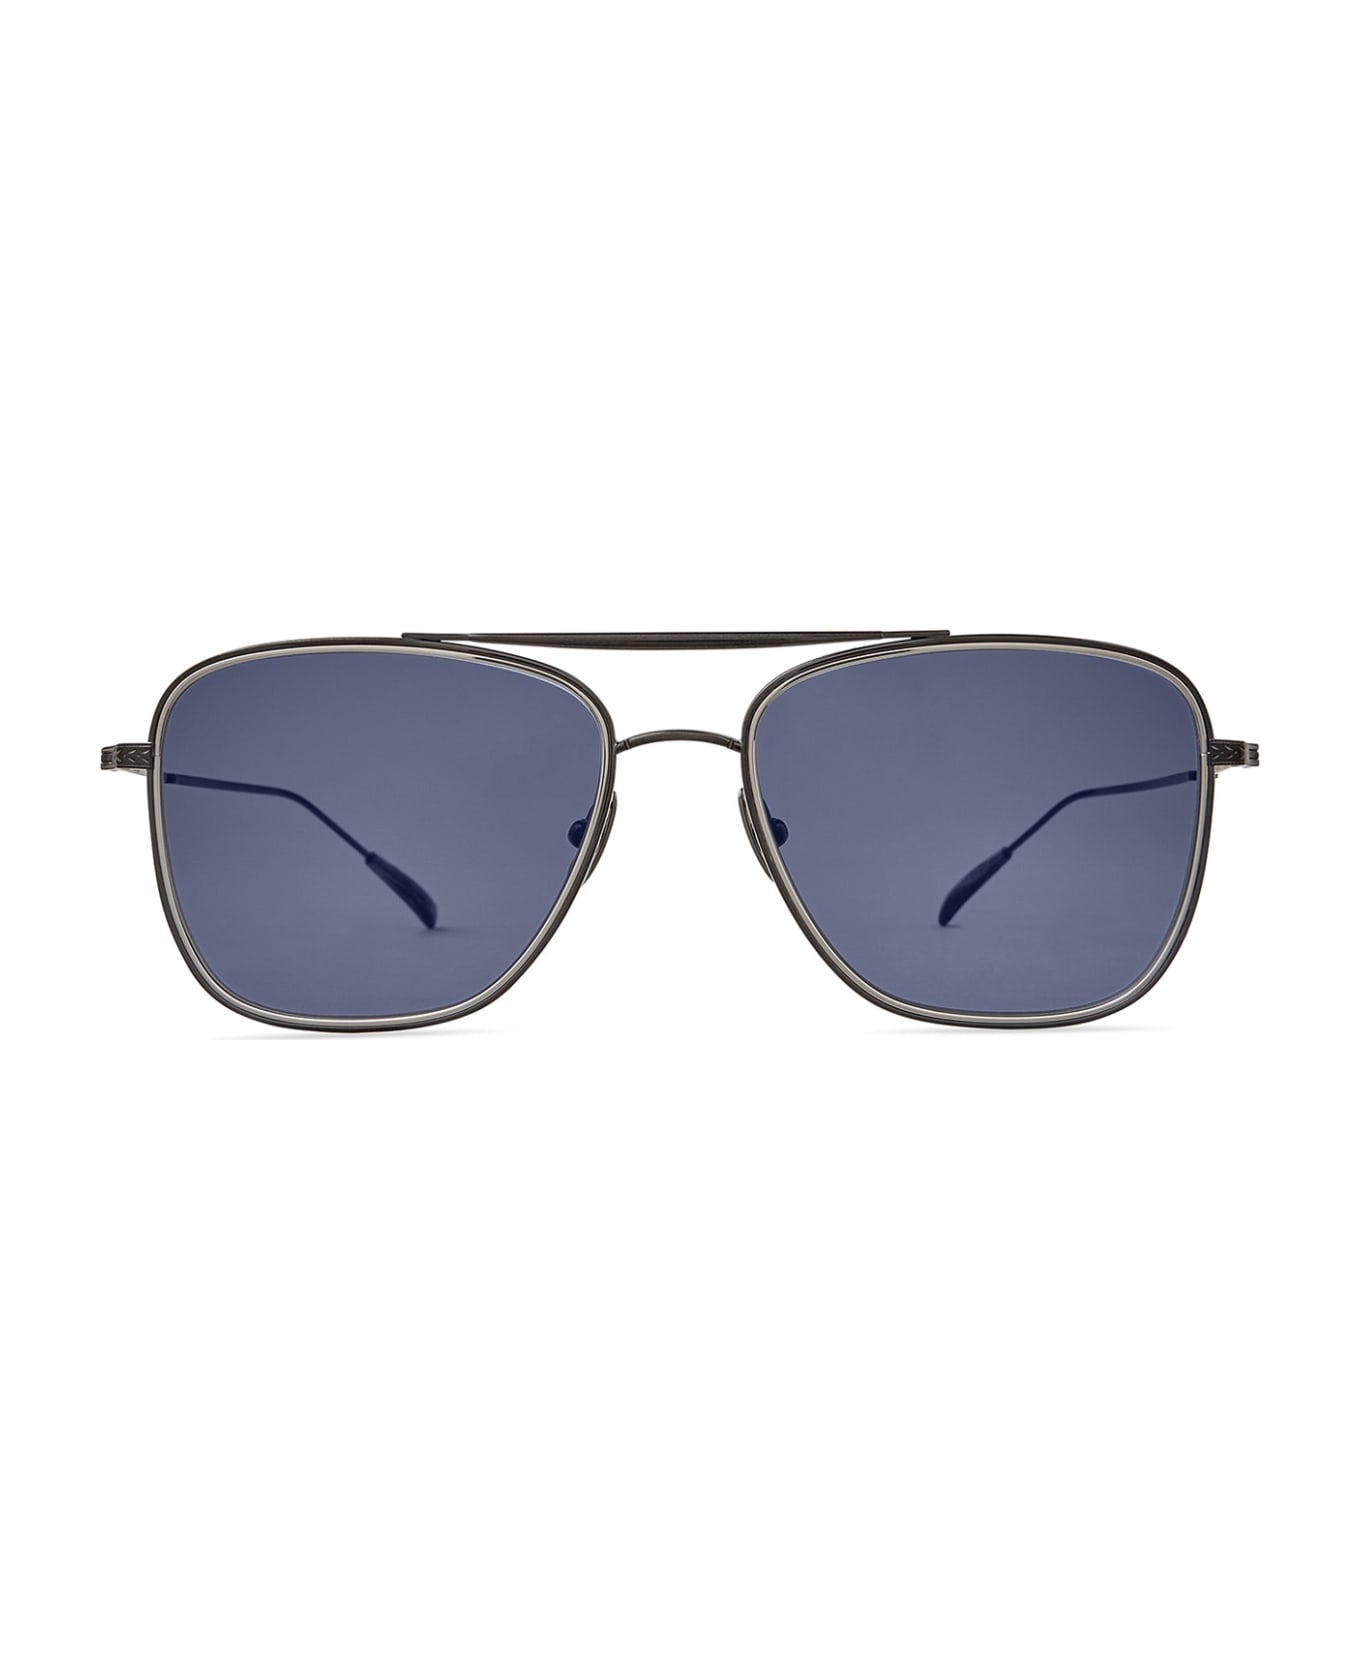 Mr. Leight Novarro S Gunmetal-coldwater/blue Sunglasses - Gunmetal-Coldwater/Blue